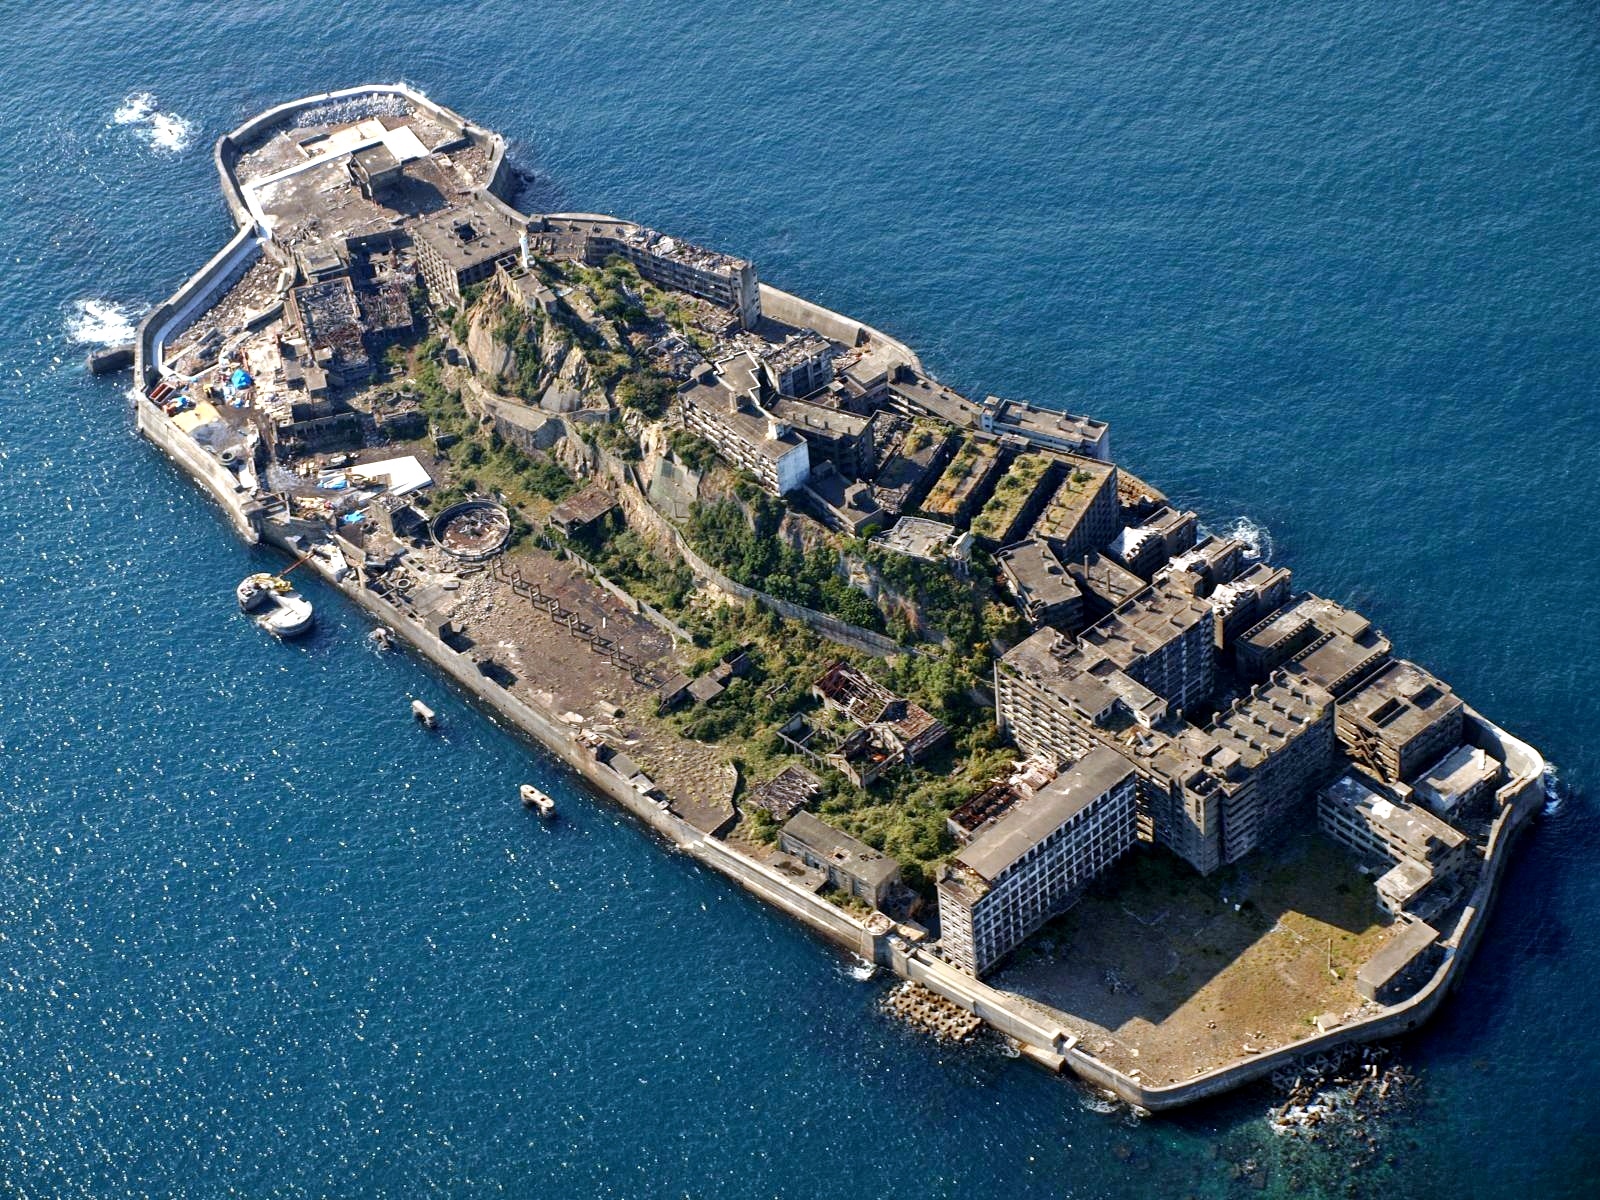 Battleship Island’, one of Japan’s most famous abandoned islands